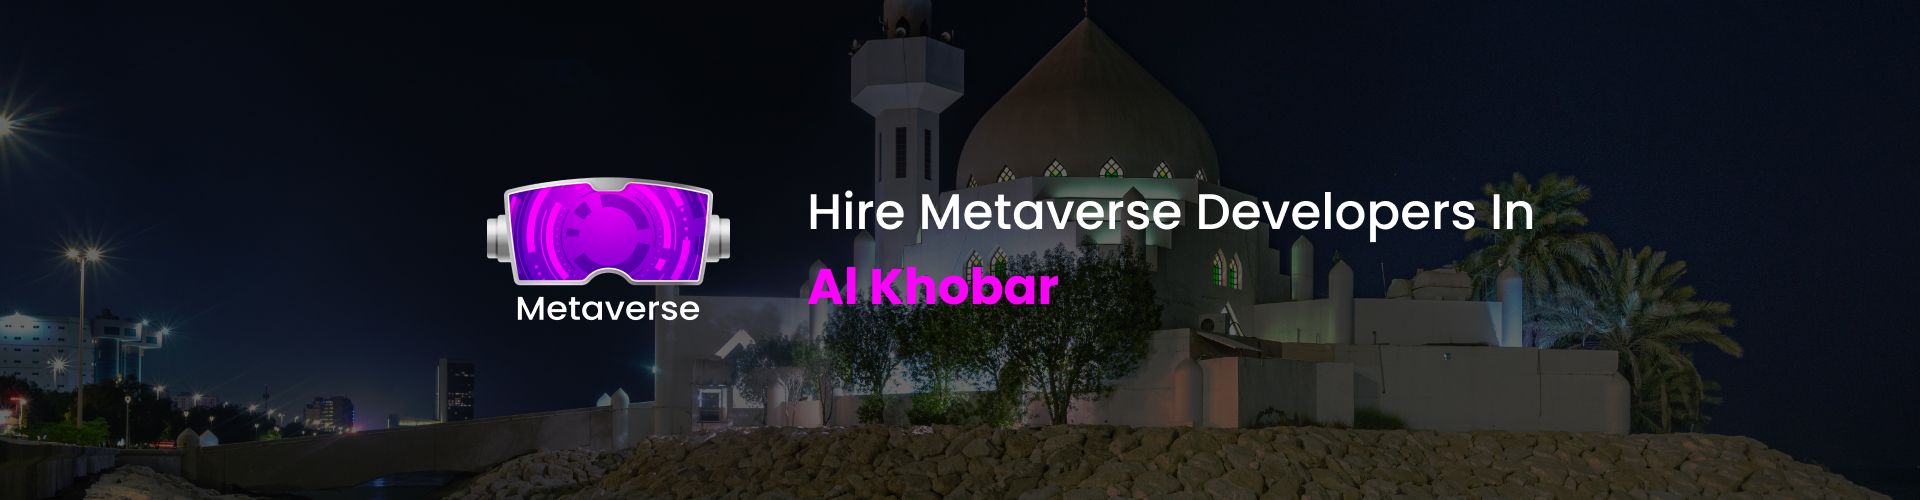 metaverse developers in al khobar 